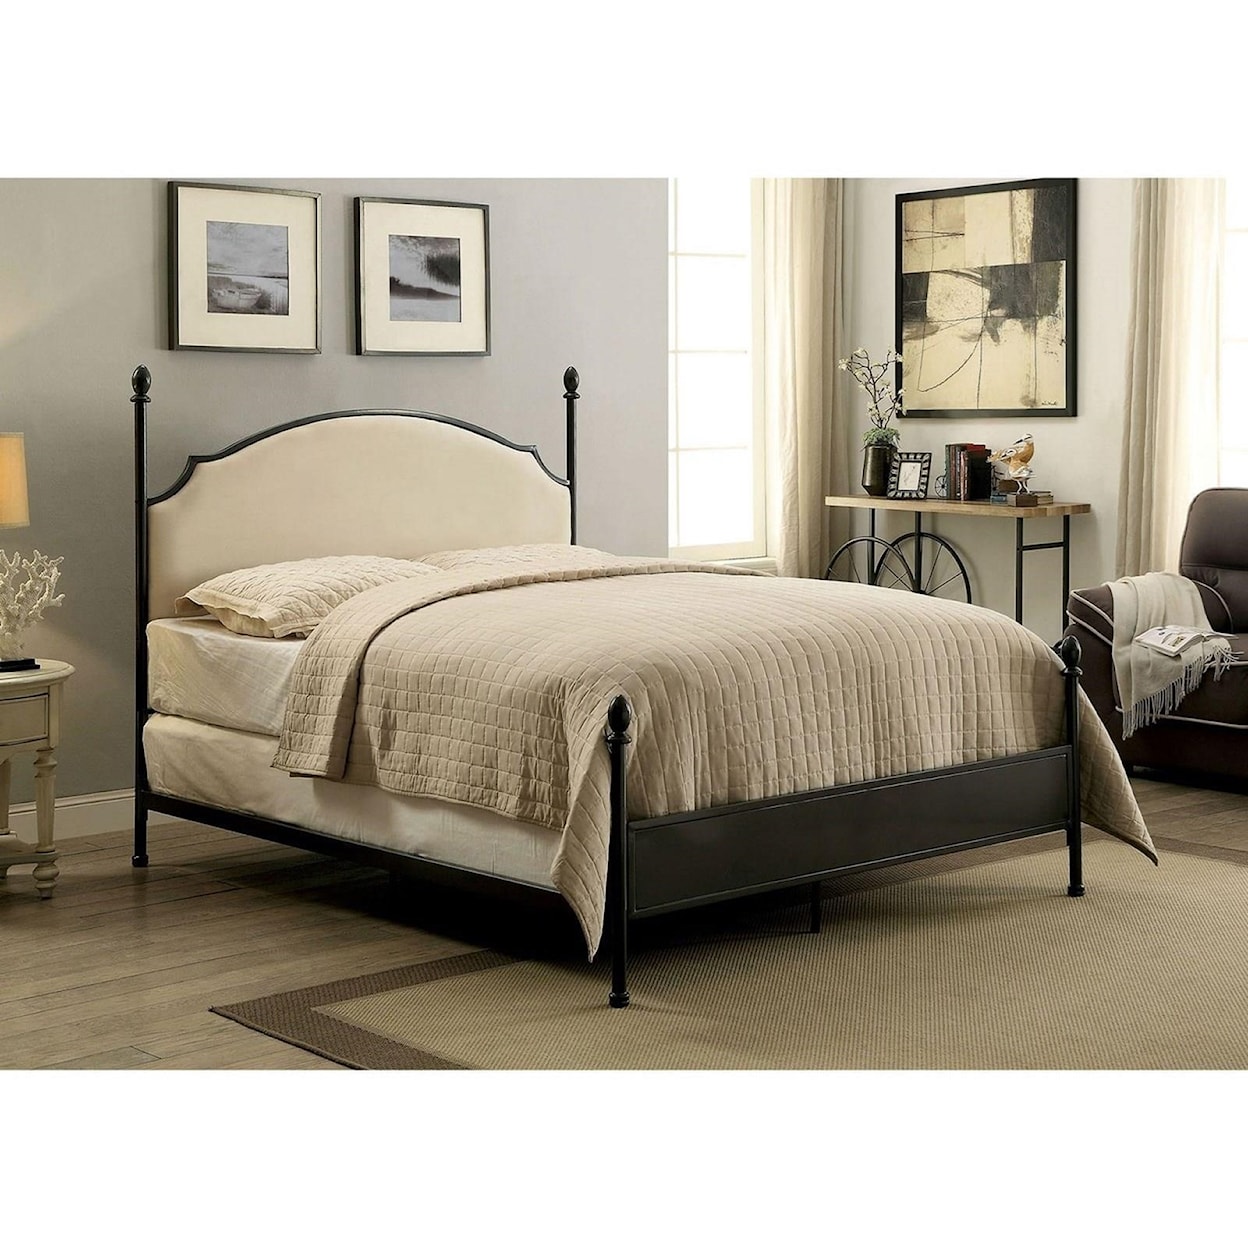 Furniture of America Sinead Twin Bed